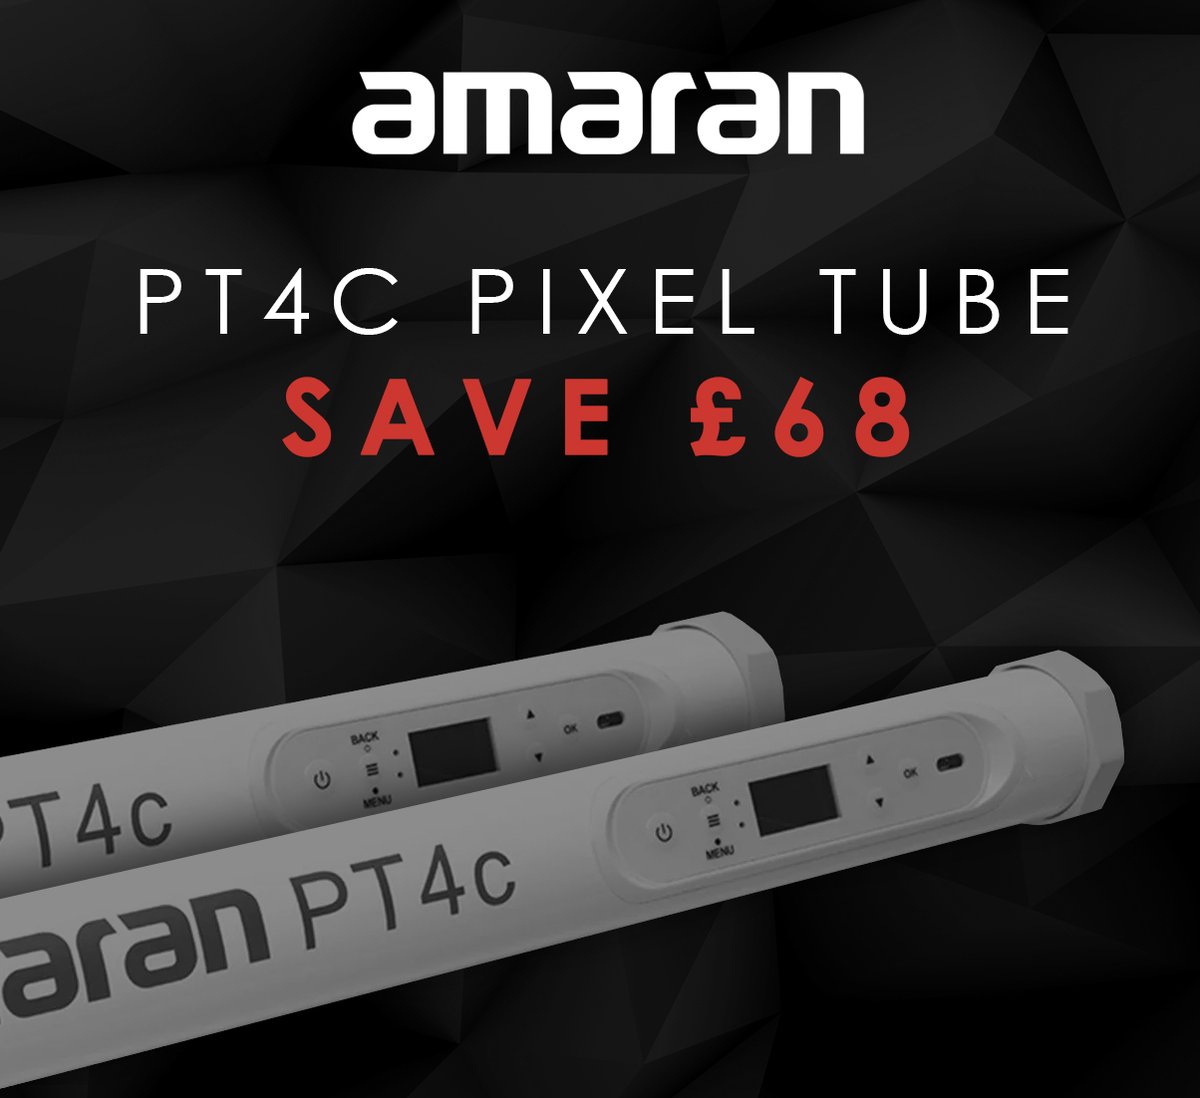 💥 Save £68 on Amaran PT4C Pixel Tubes! 💥 View deal on our website: bit.ly/3RbK6Dx